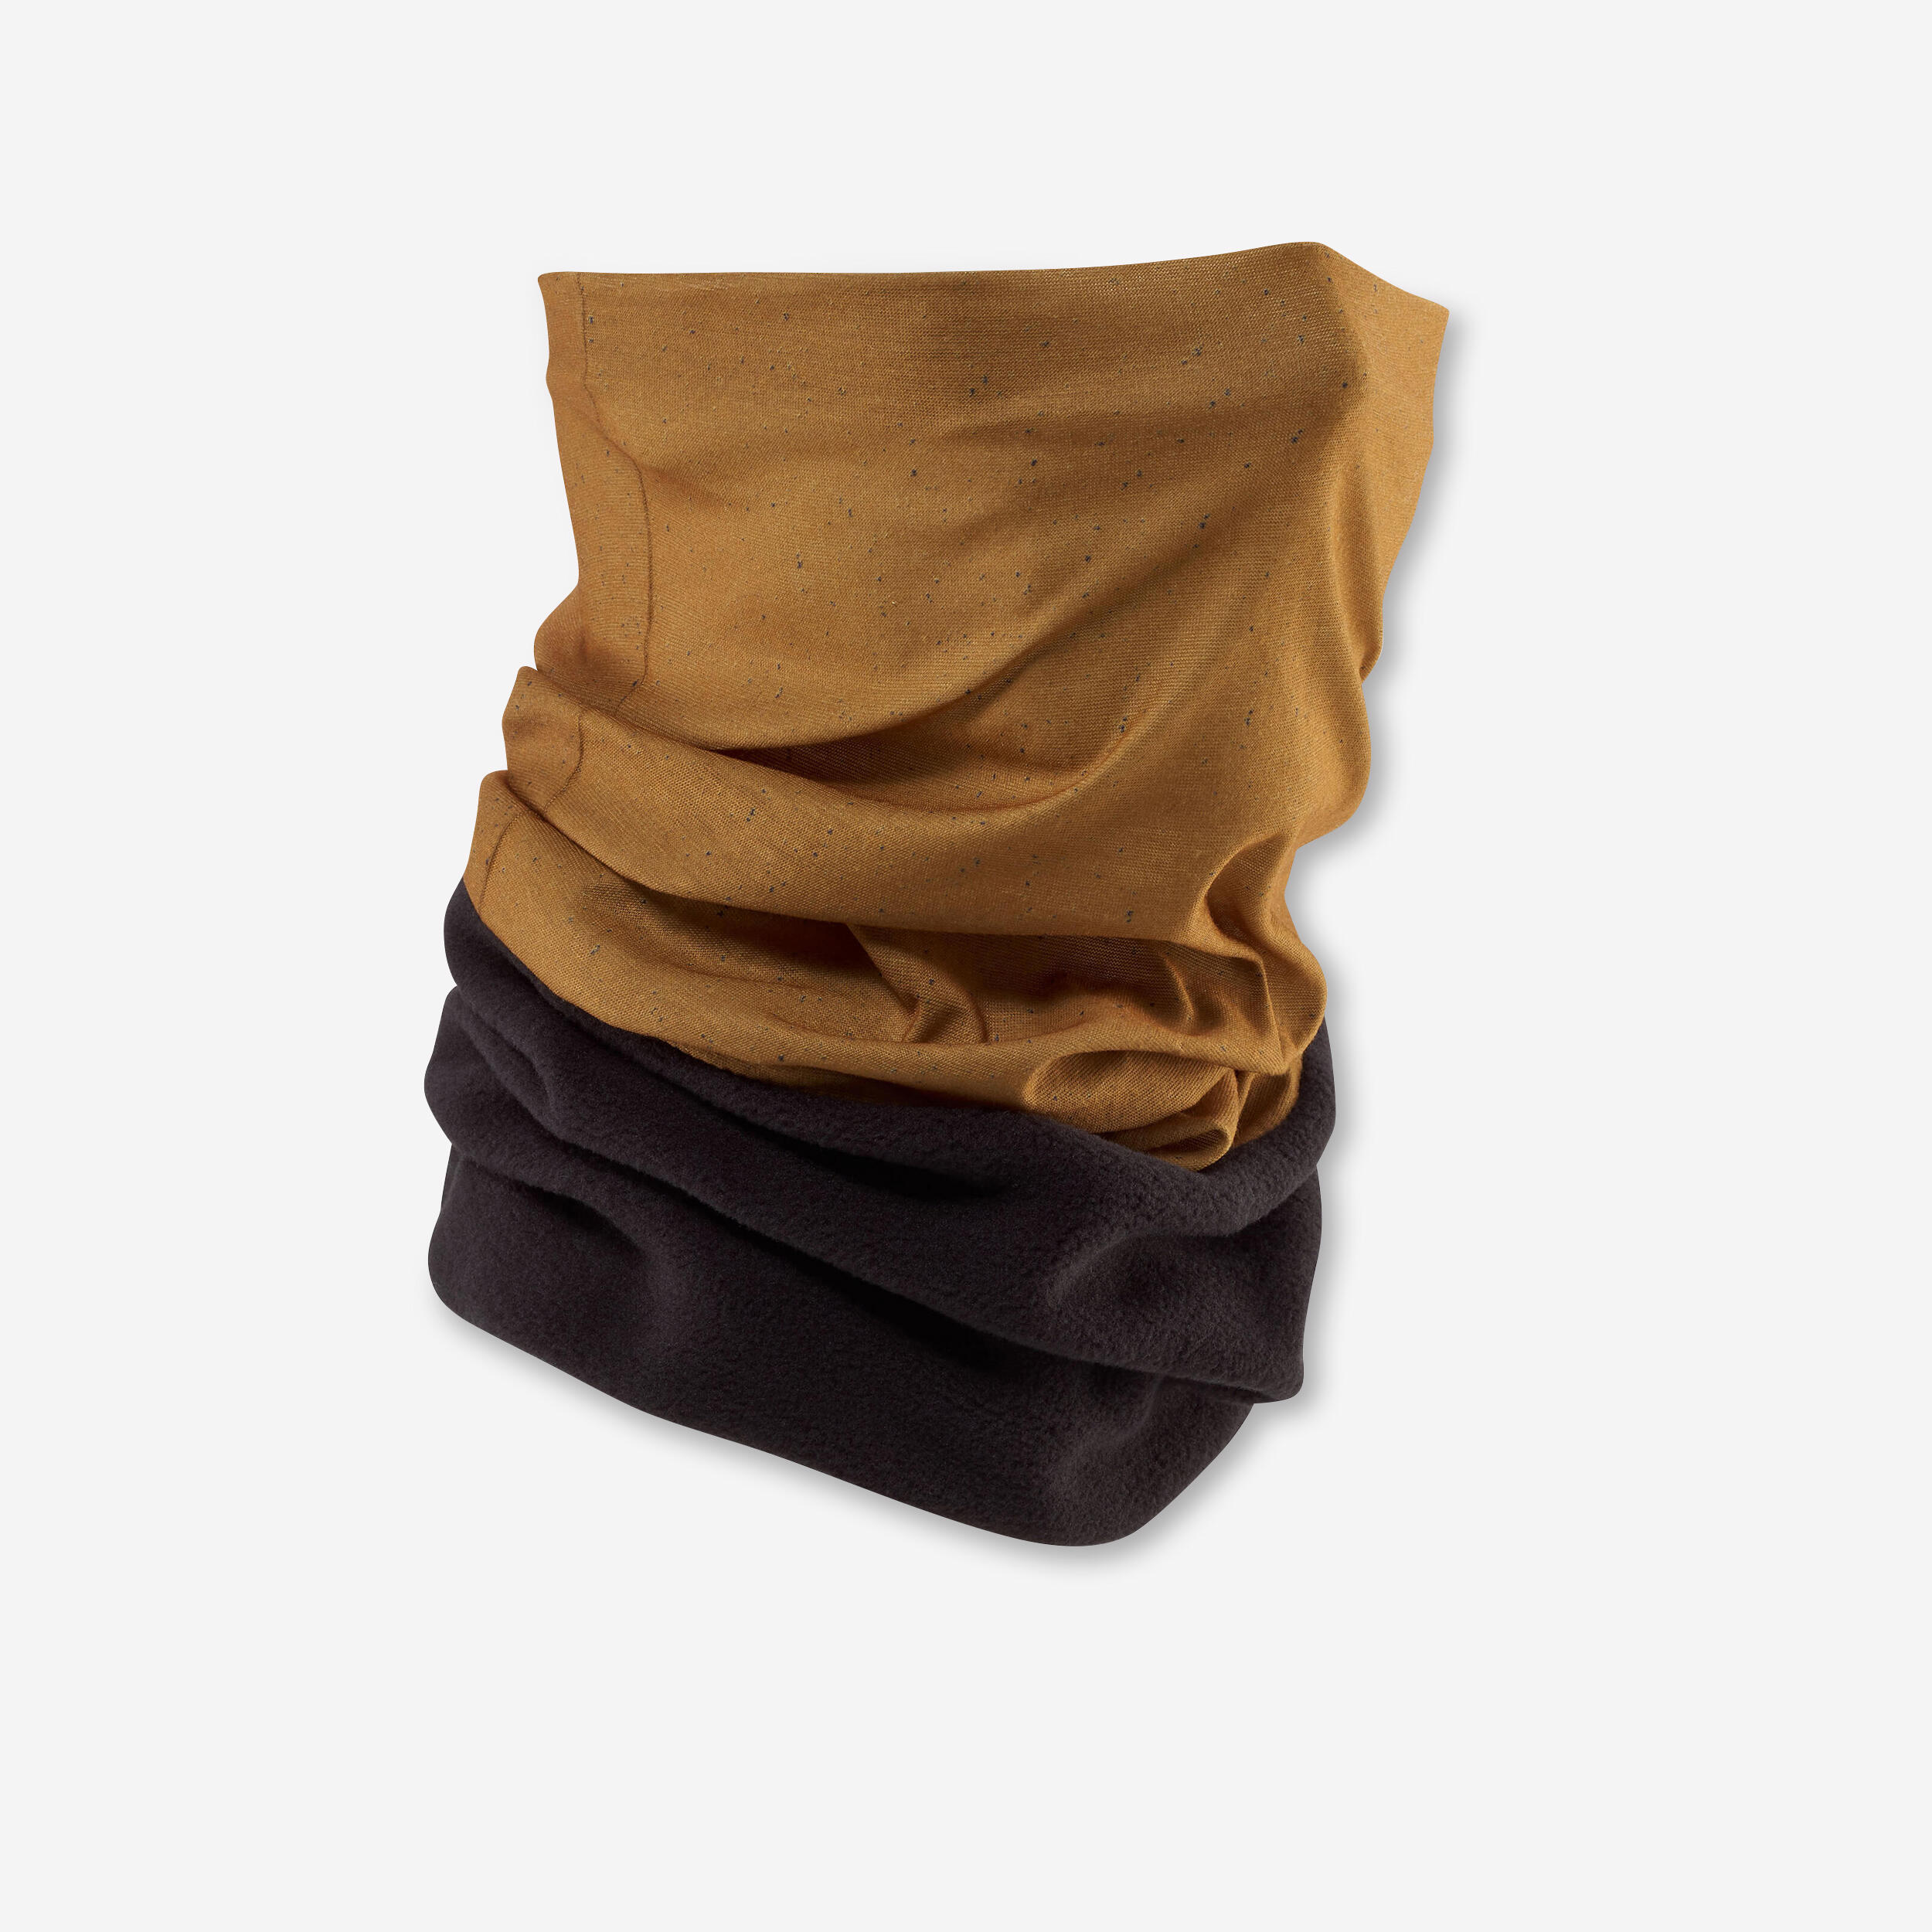 Woolen Winter Socks -SH500 Mid Black 2 Pairs